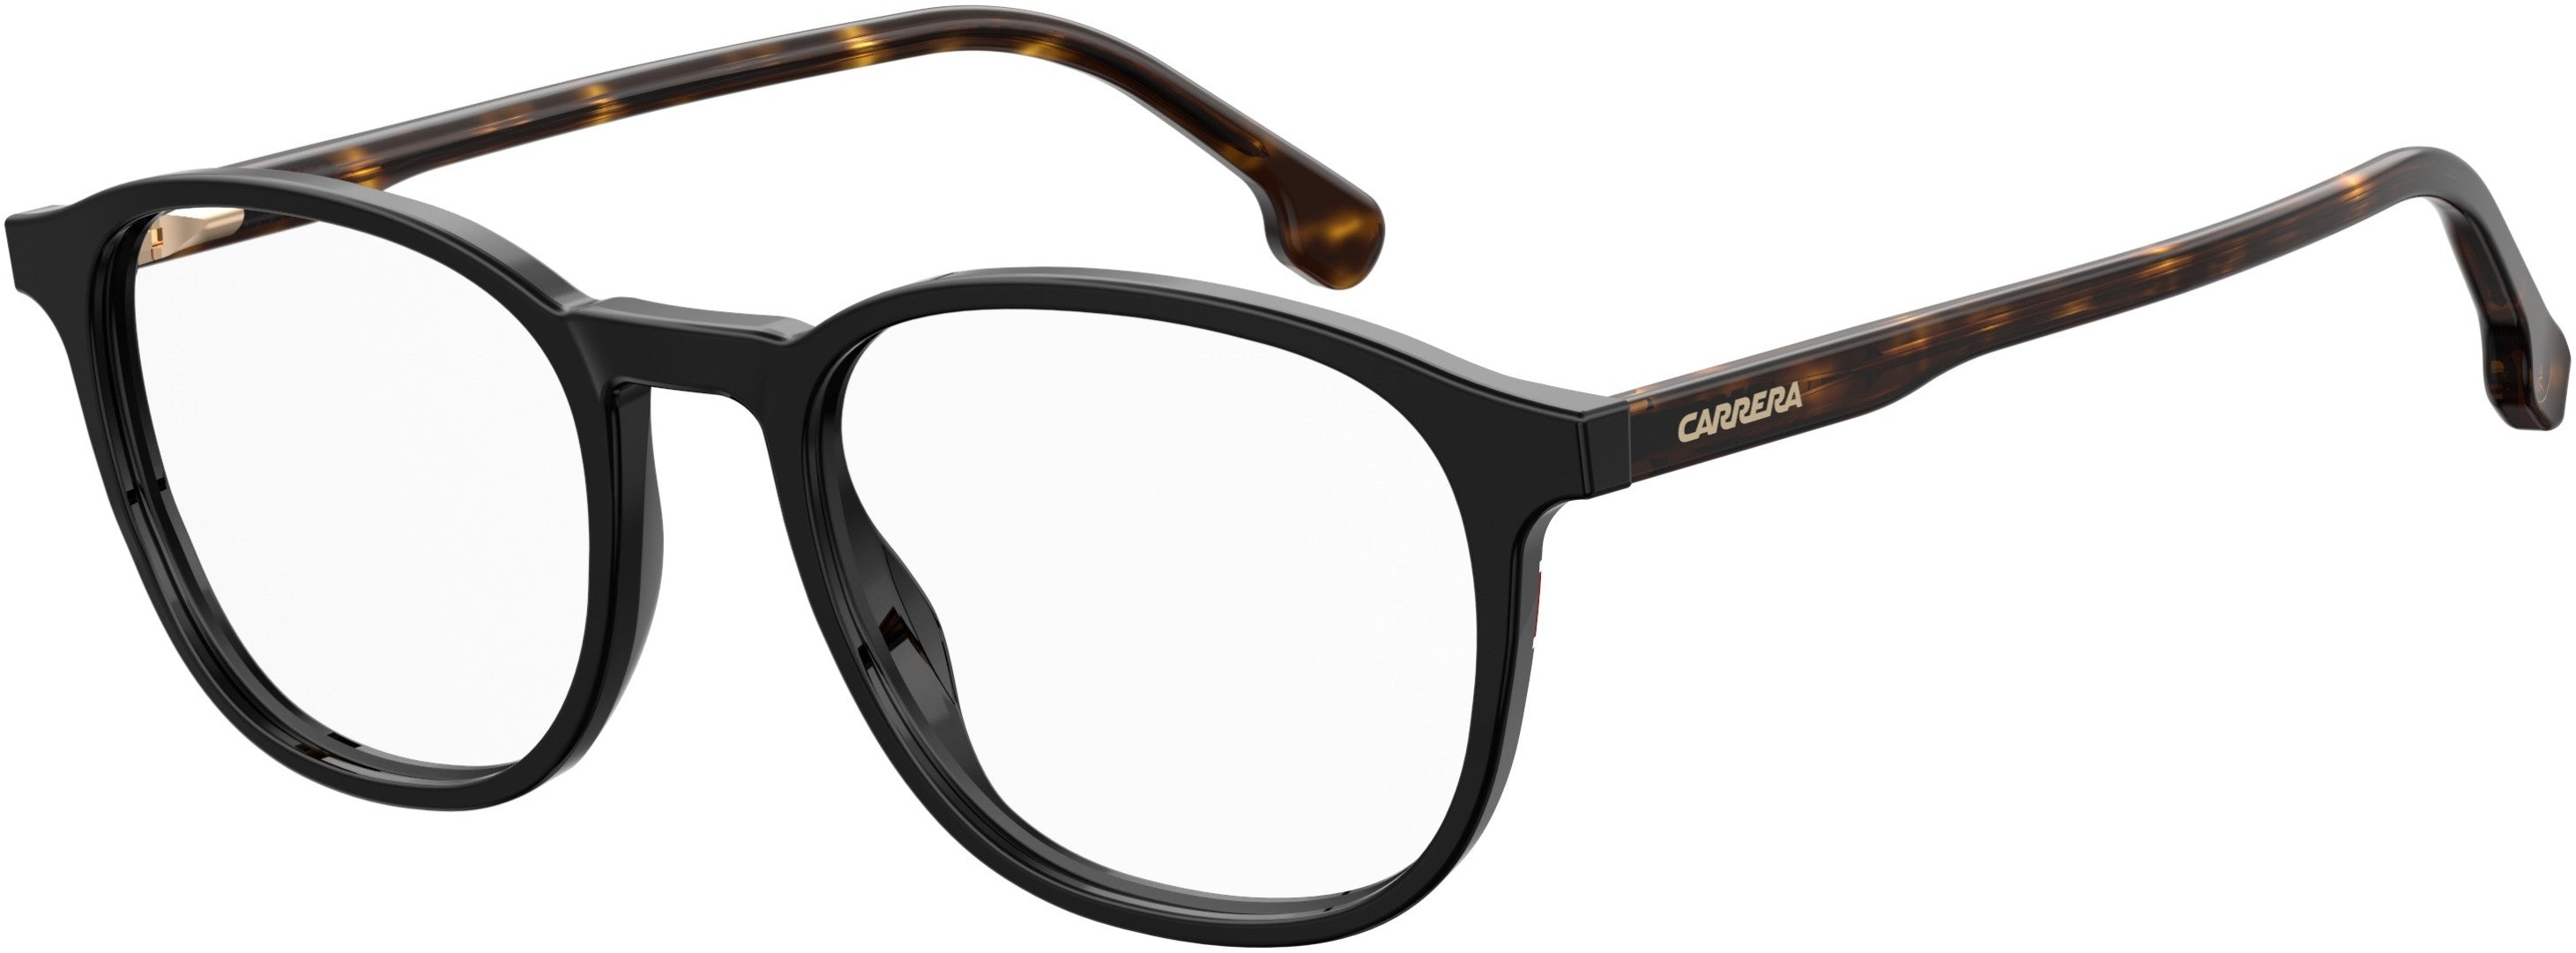  Carrera 215 Rectangular Eyeglasses 0581-0581  Havana Black (00 Demo Lens)